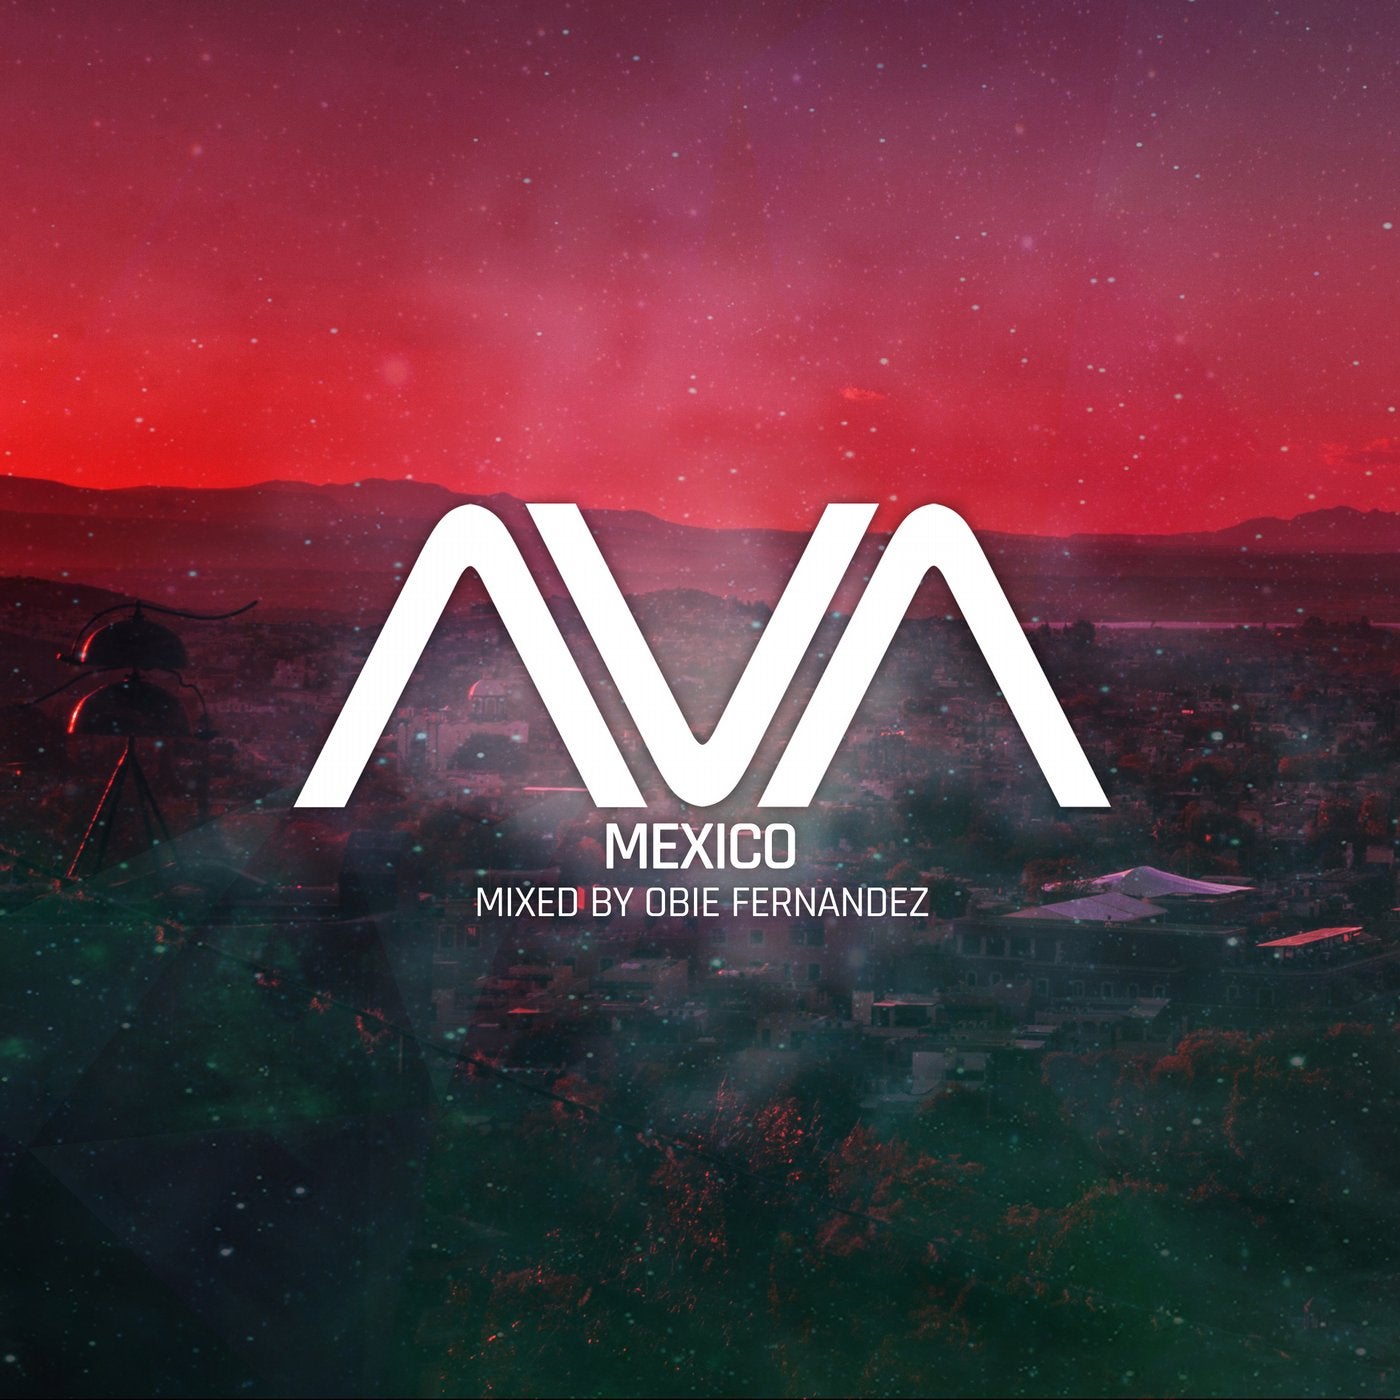 AVA Mexico mixed by Obie Fernandez